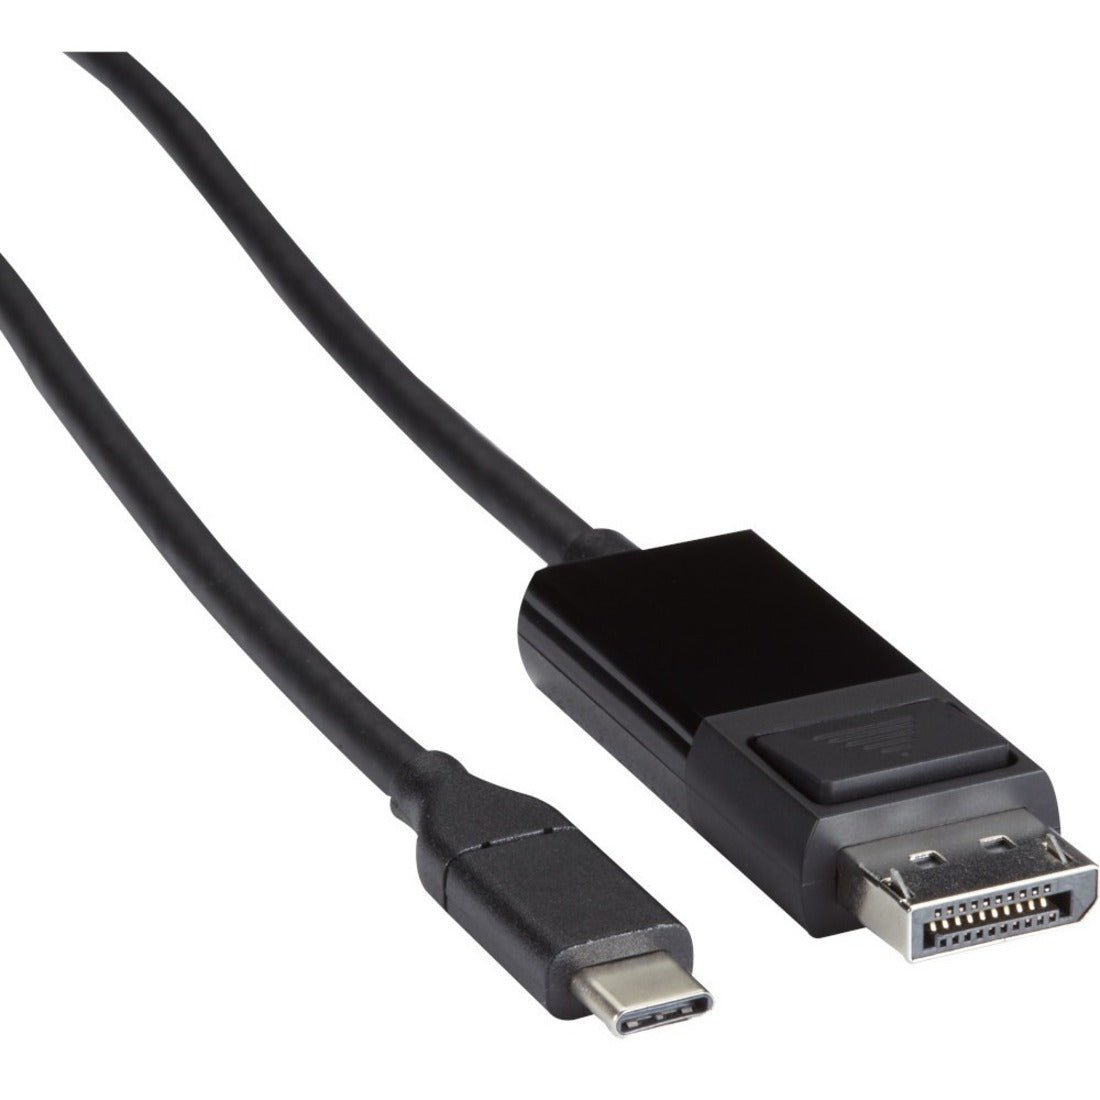 Black Box VA-USBC31-DP12-006 USB-C Adapter Cable - USB-C to DisplayPort Adapter 4K60 HDR Support